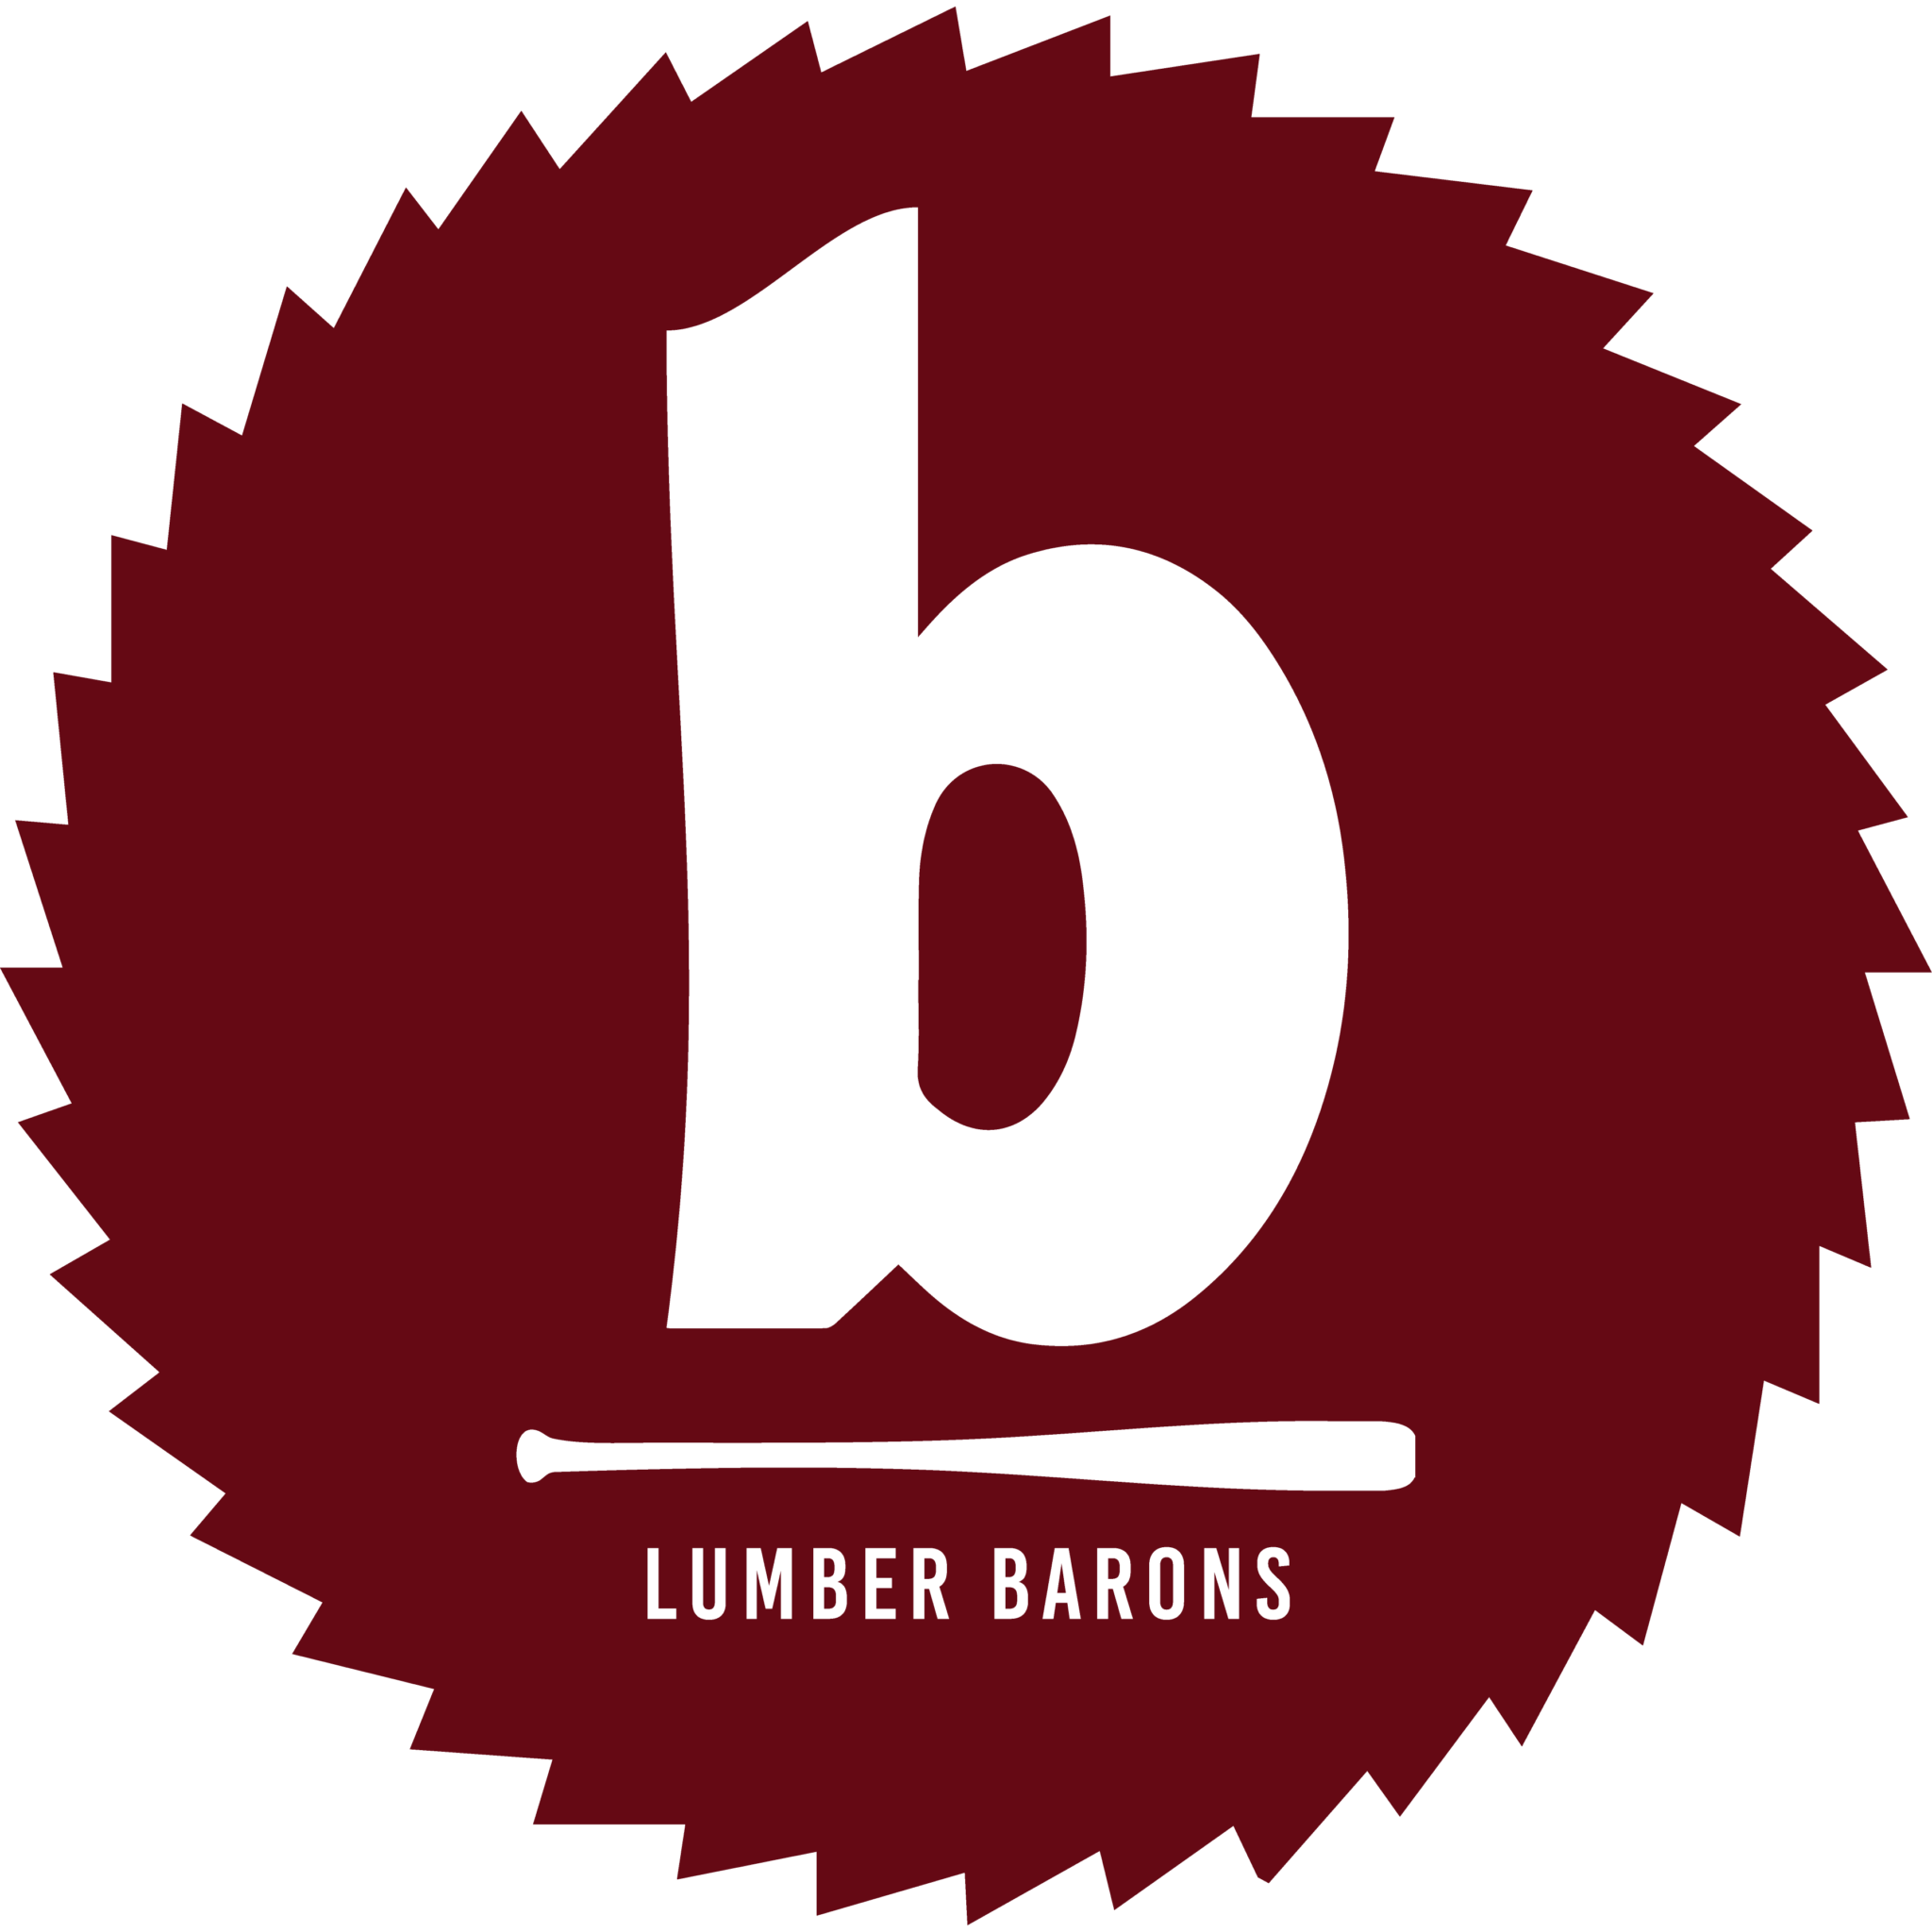 The Bangor Lumber Barons